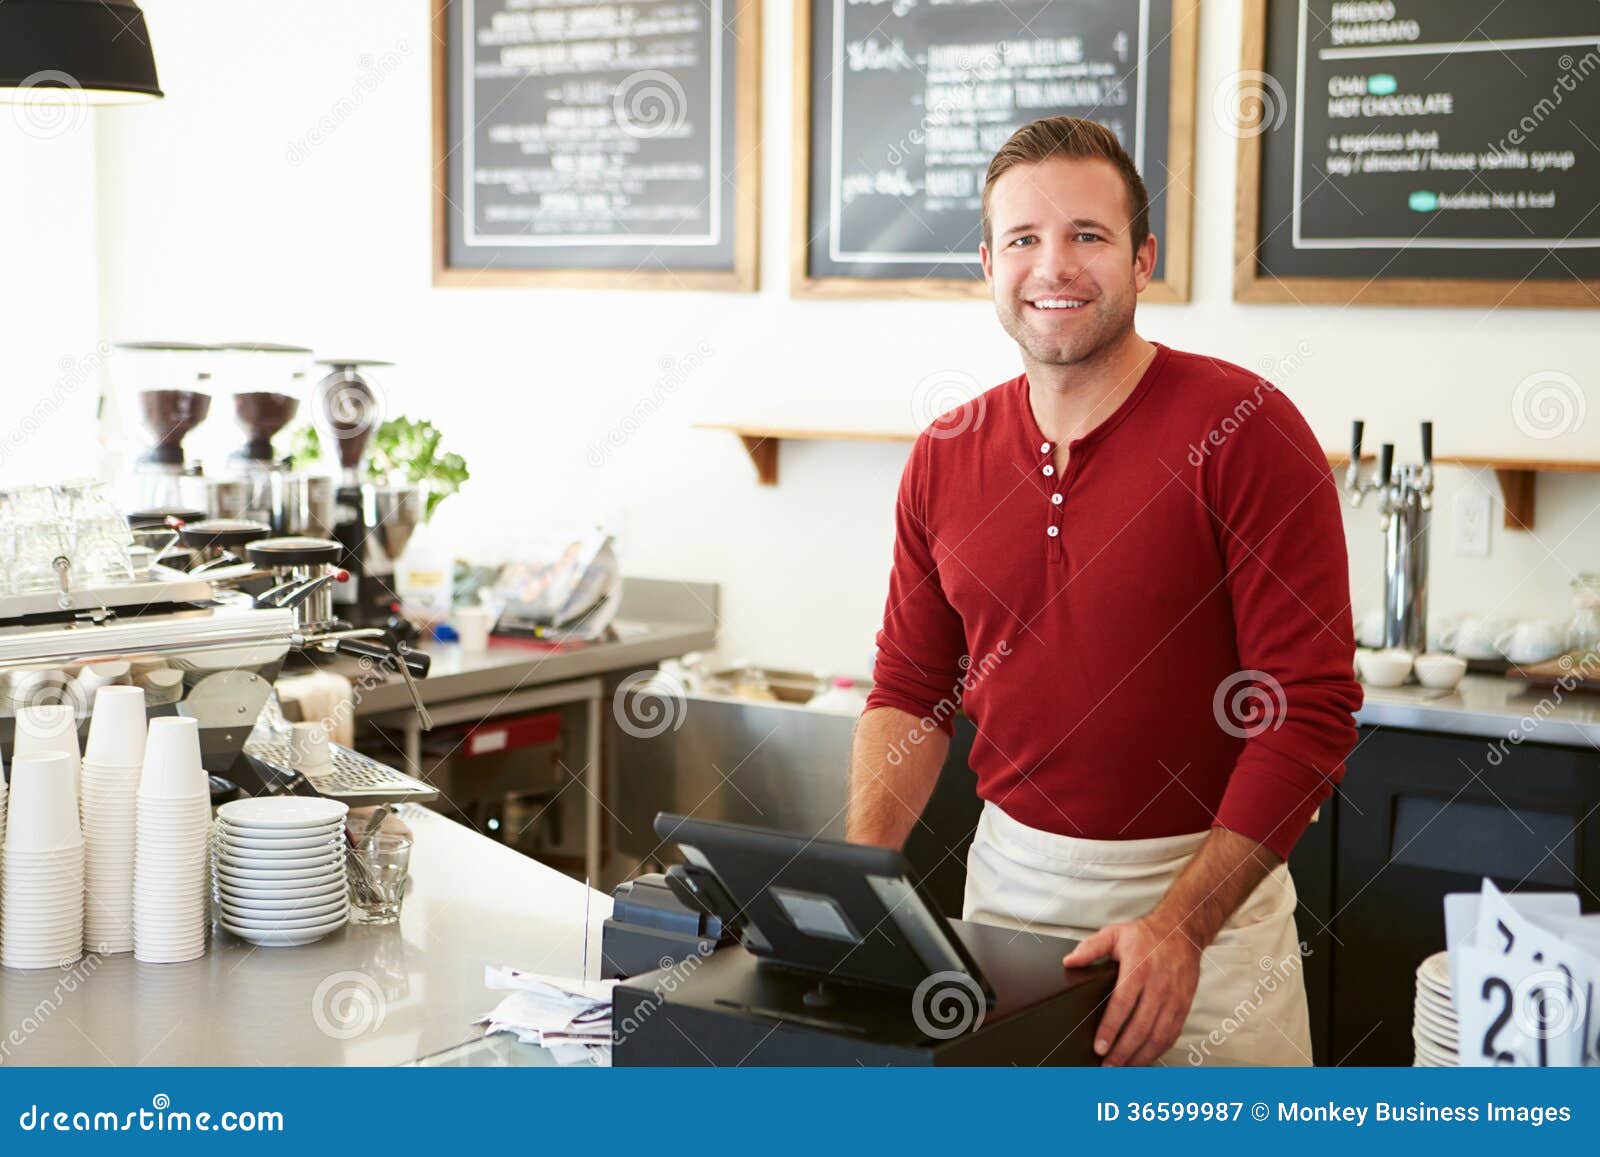 customer paying in coffee shop using touchscreen